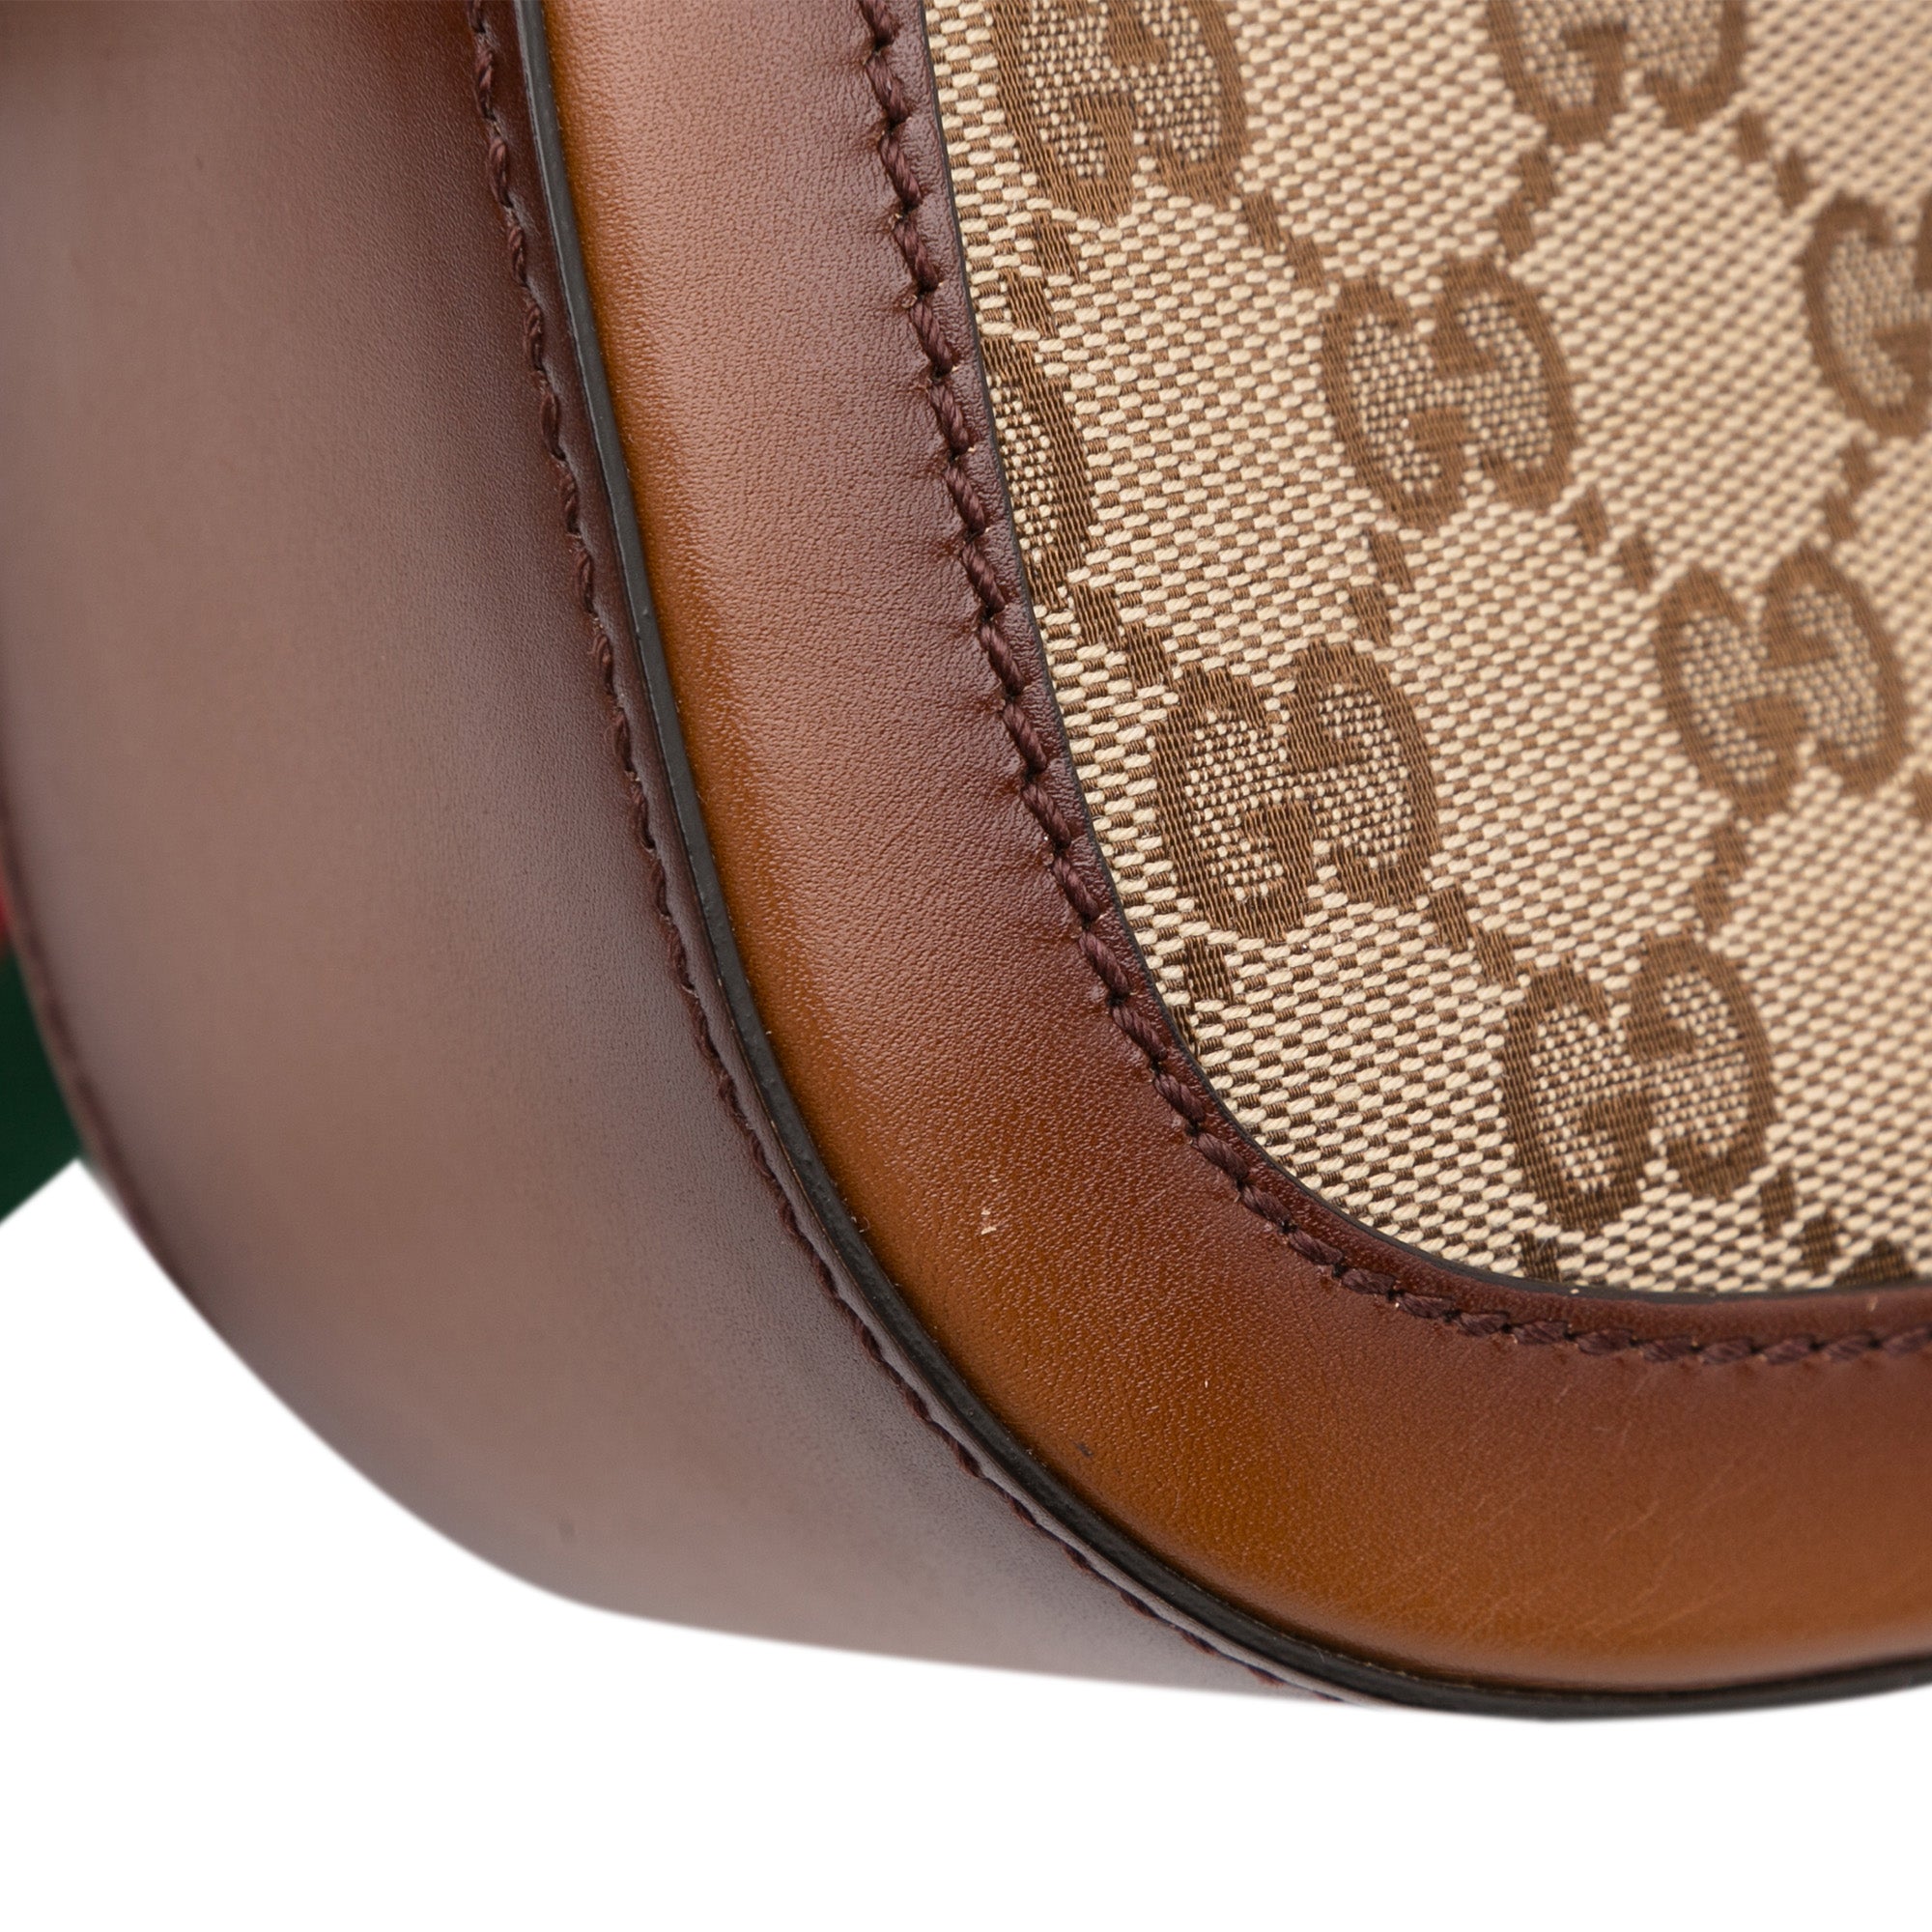 Gucci Lady Web Shoulder Bag GG Canvas Medium Brown 22002618